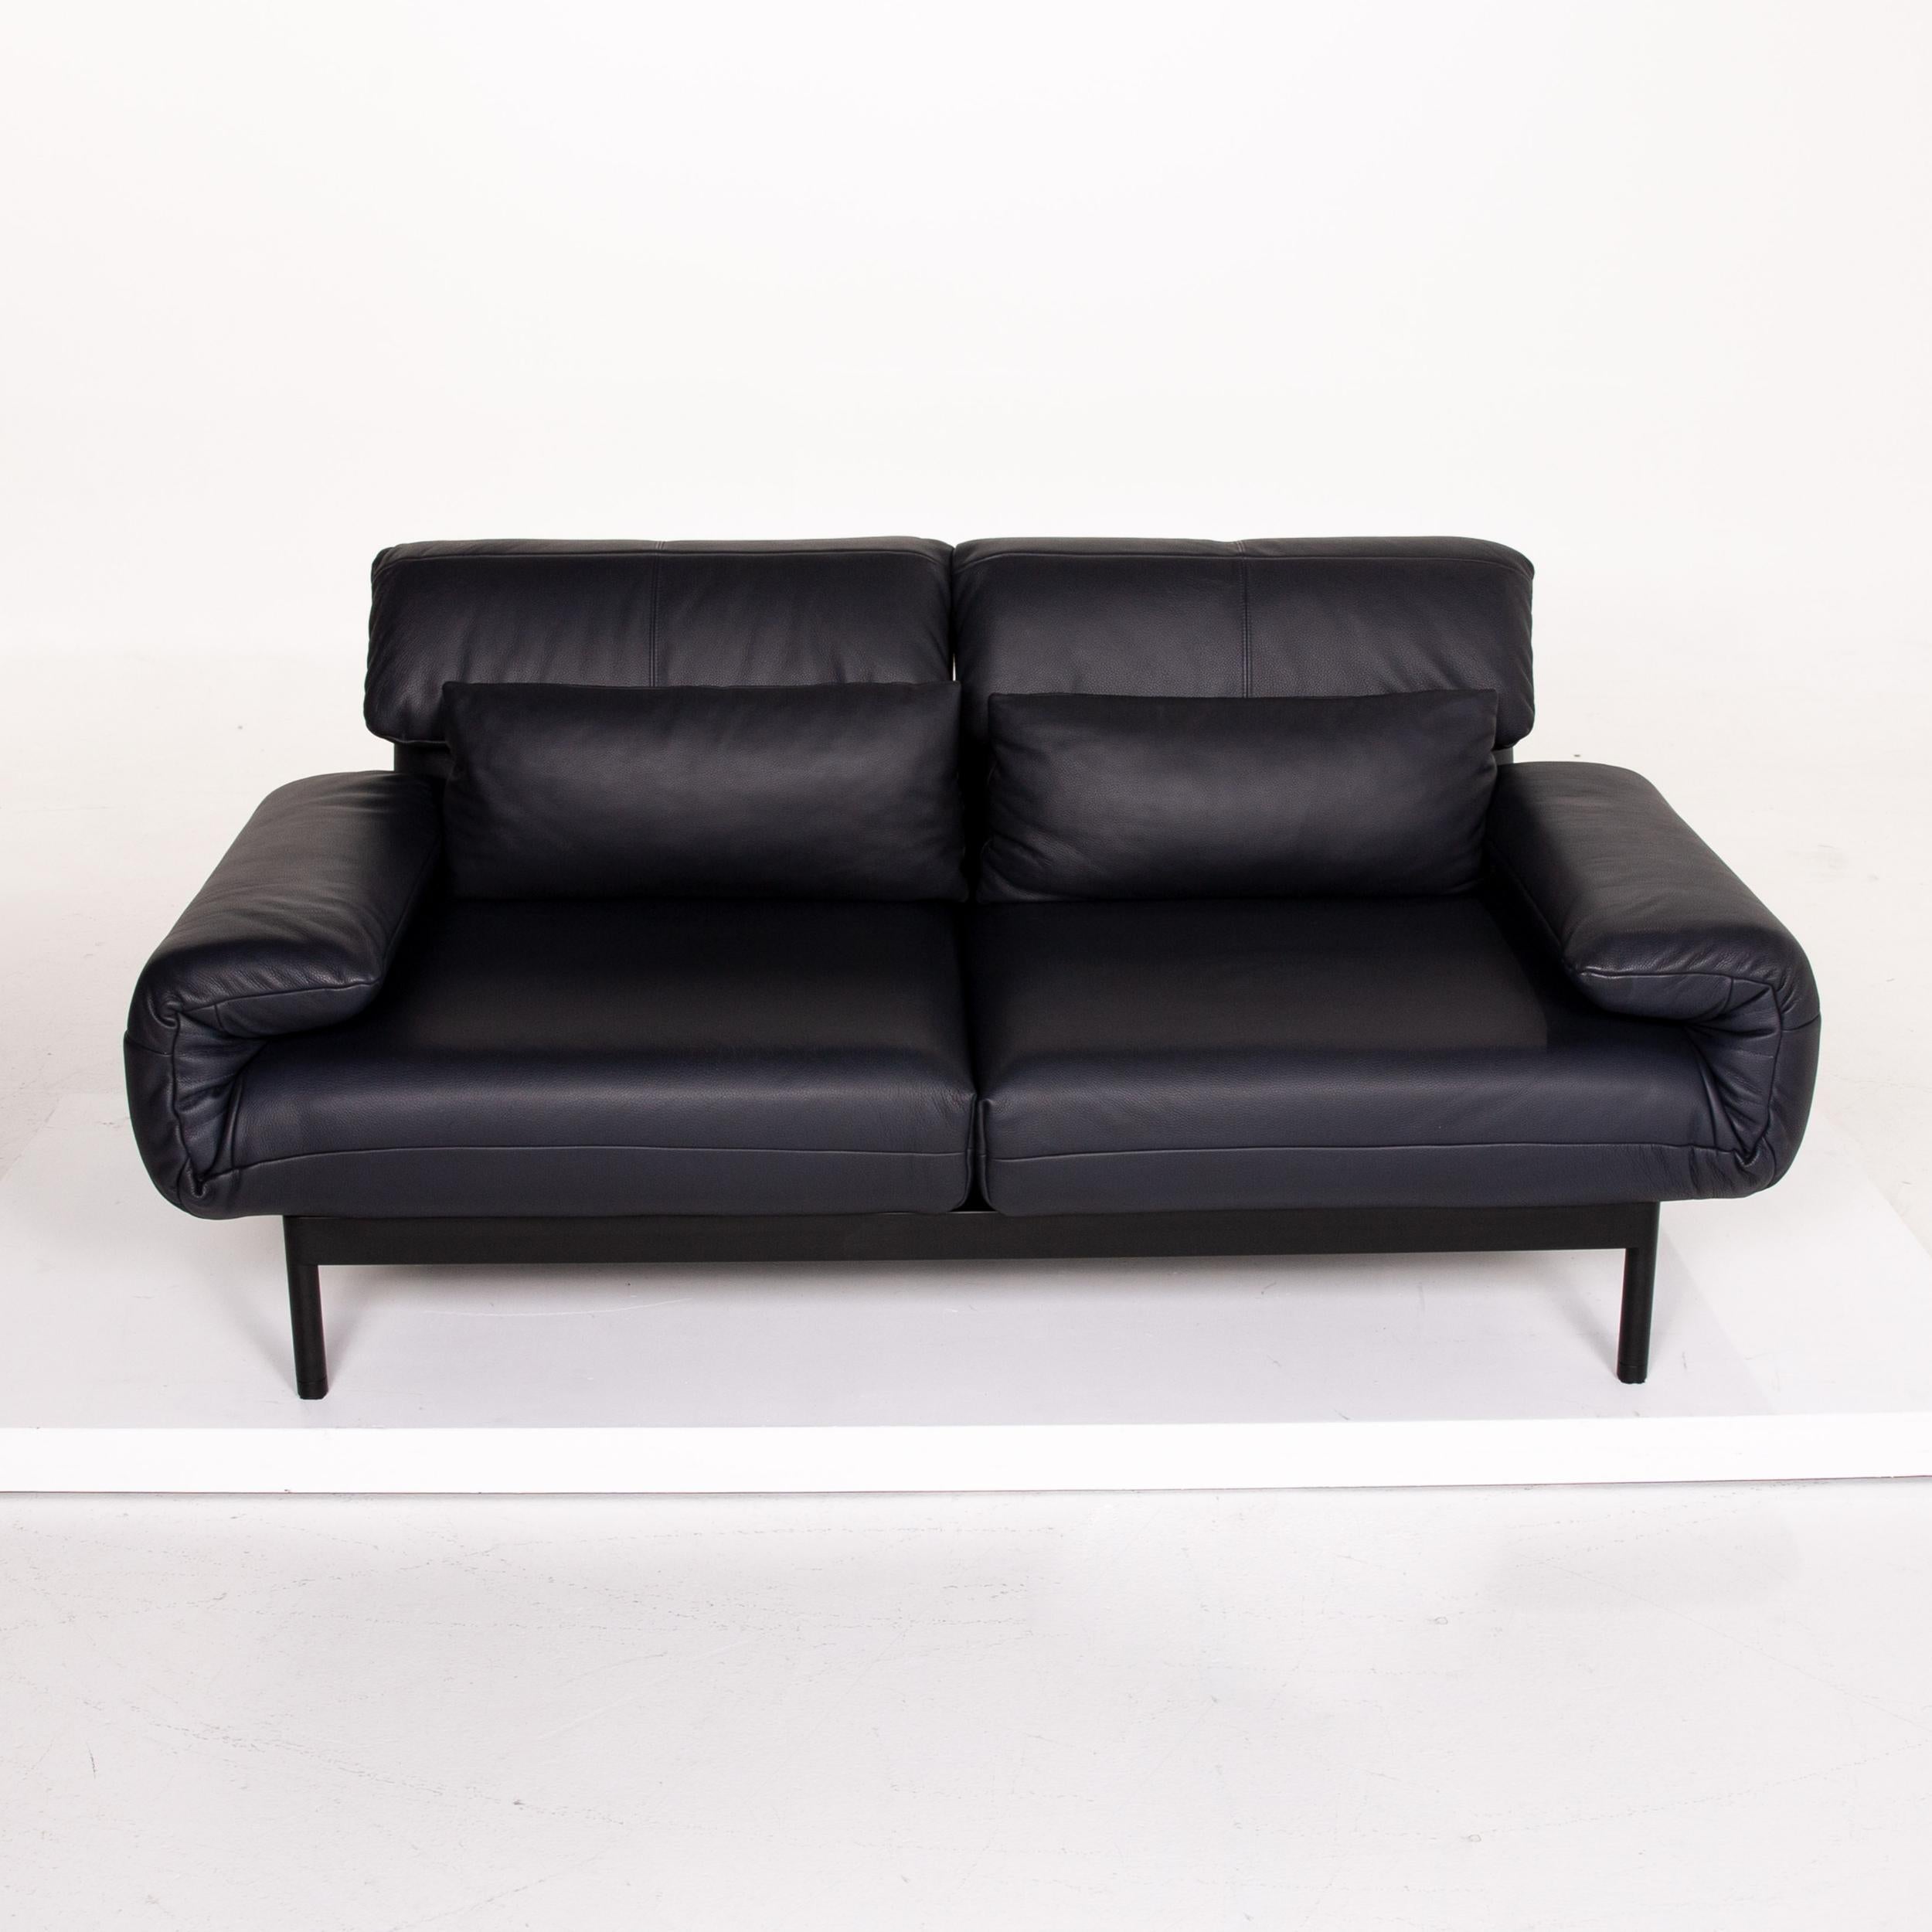 Rolf Benz Plura Leather Sofa Dark Blue Blue Two-Seat Function Sofa Bed Sleep 4